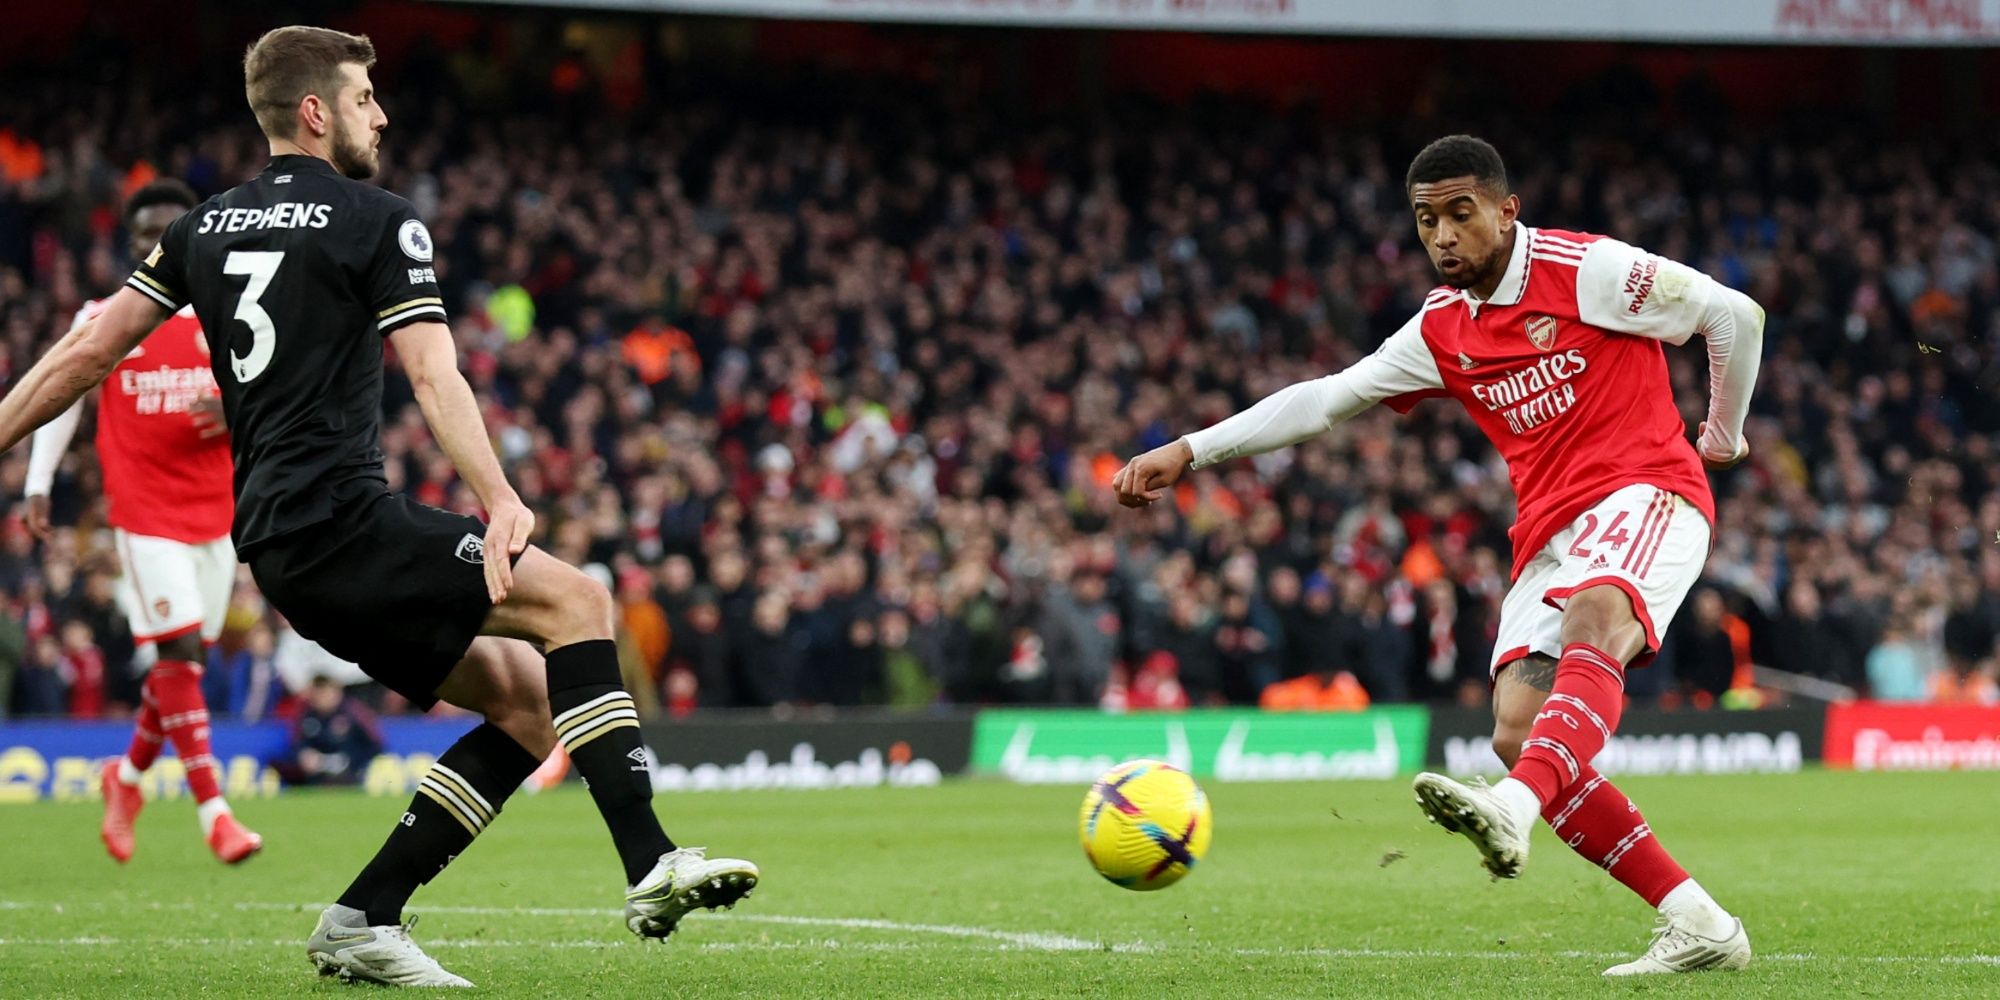 Arsenal's Reiss Nelson scores their third goal to win vs Bournemouth